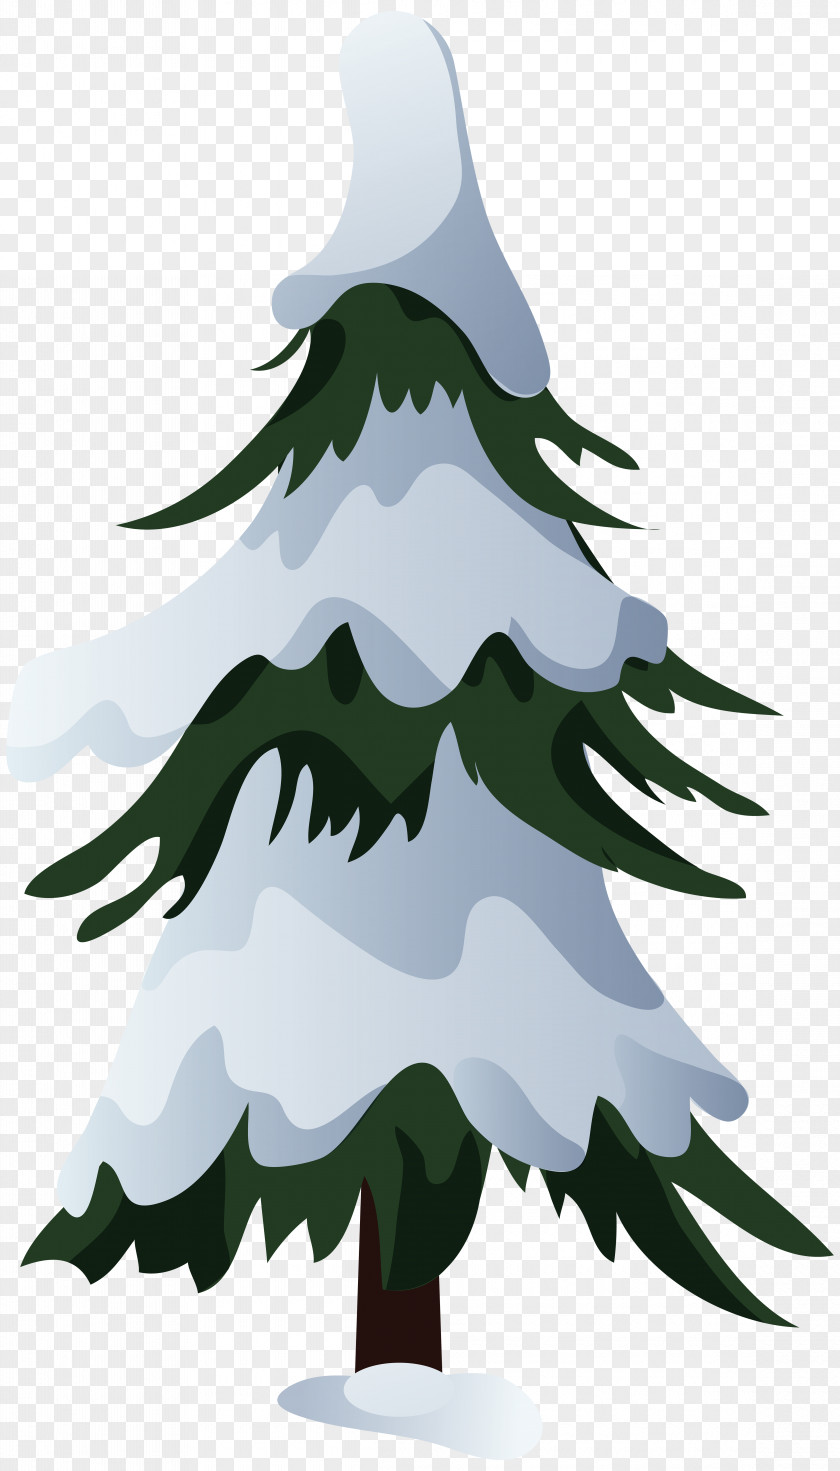 Pine Tree Christmas Snow PNG